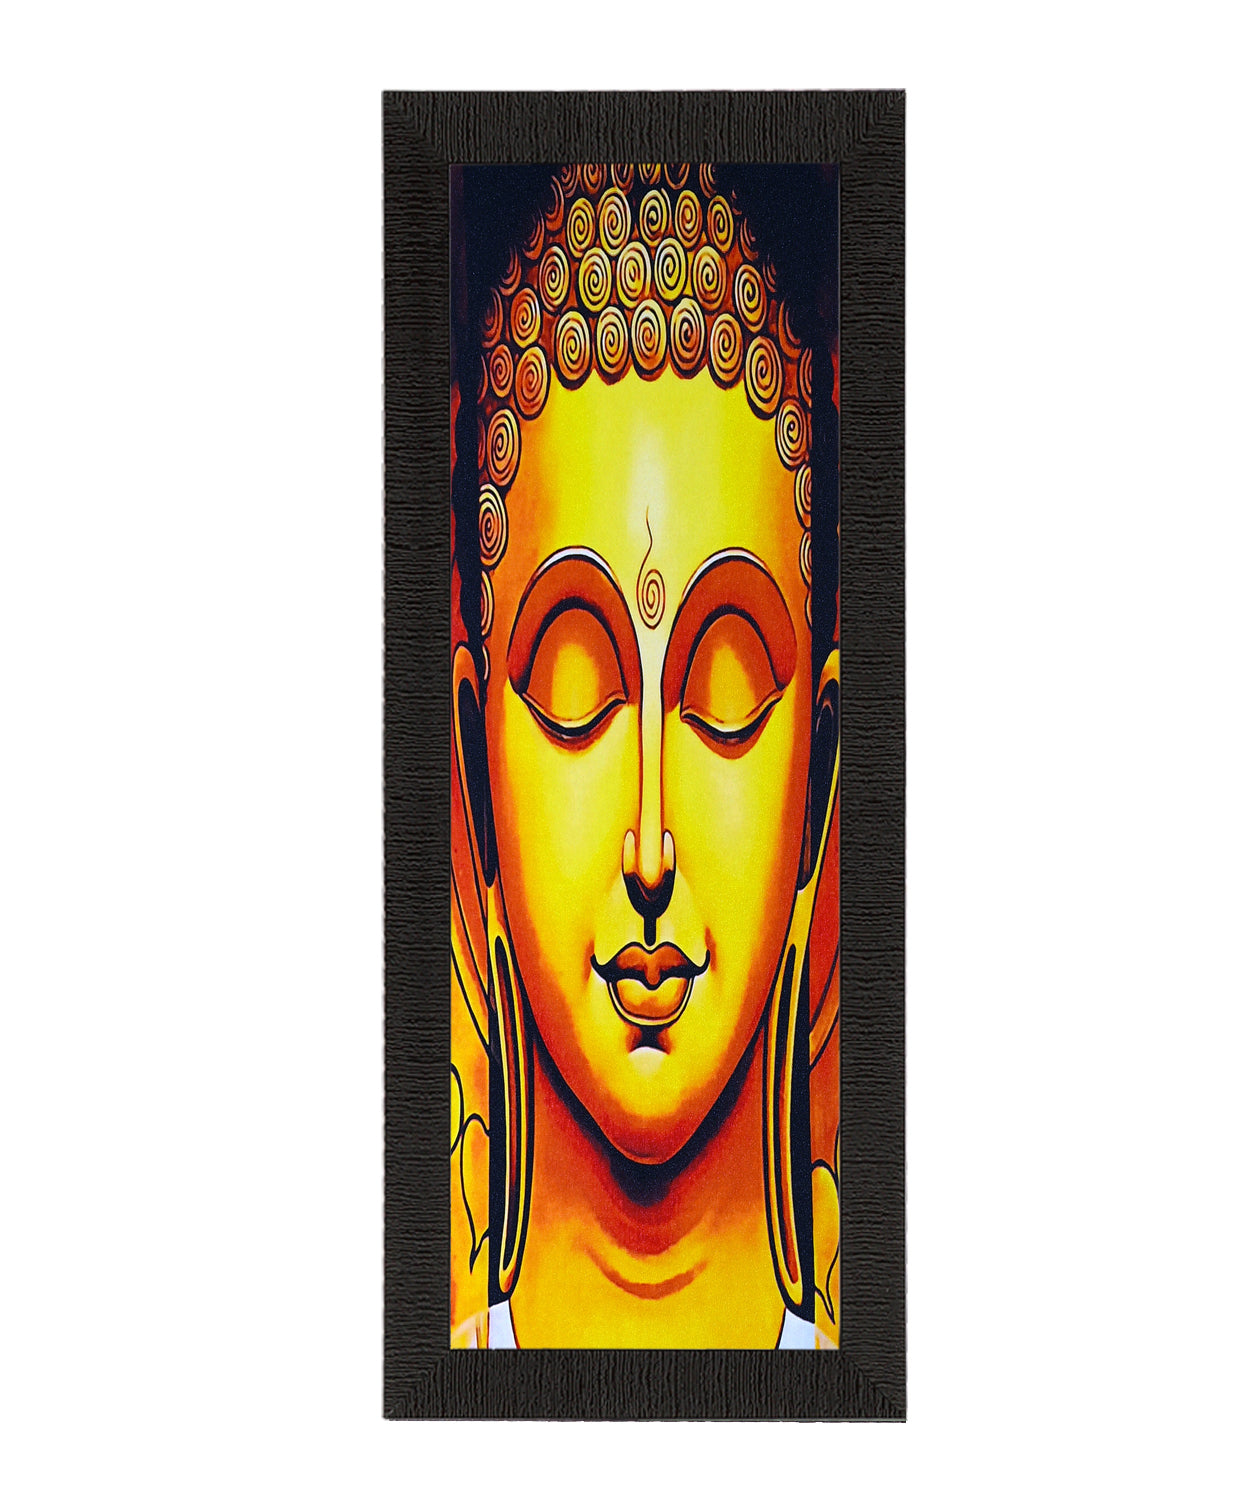 Enlightening Lord Buddha Painting Digital Printed Religious Wall Art